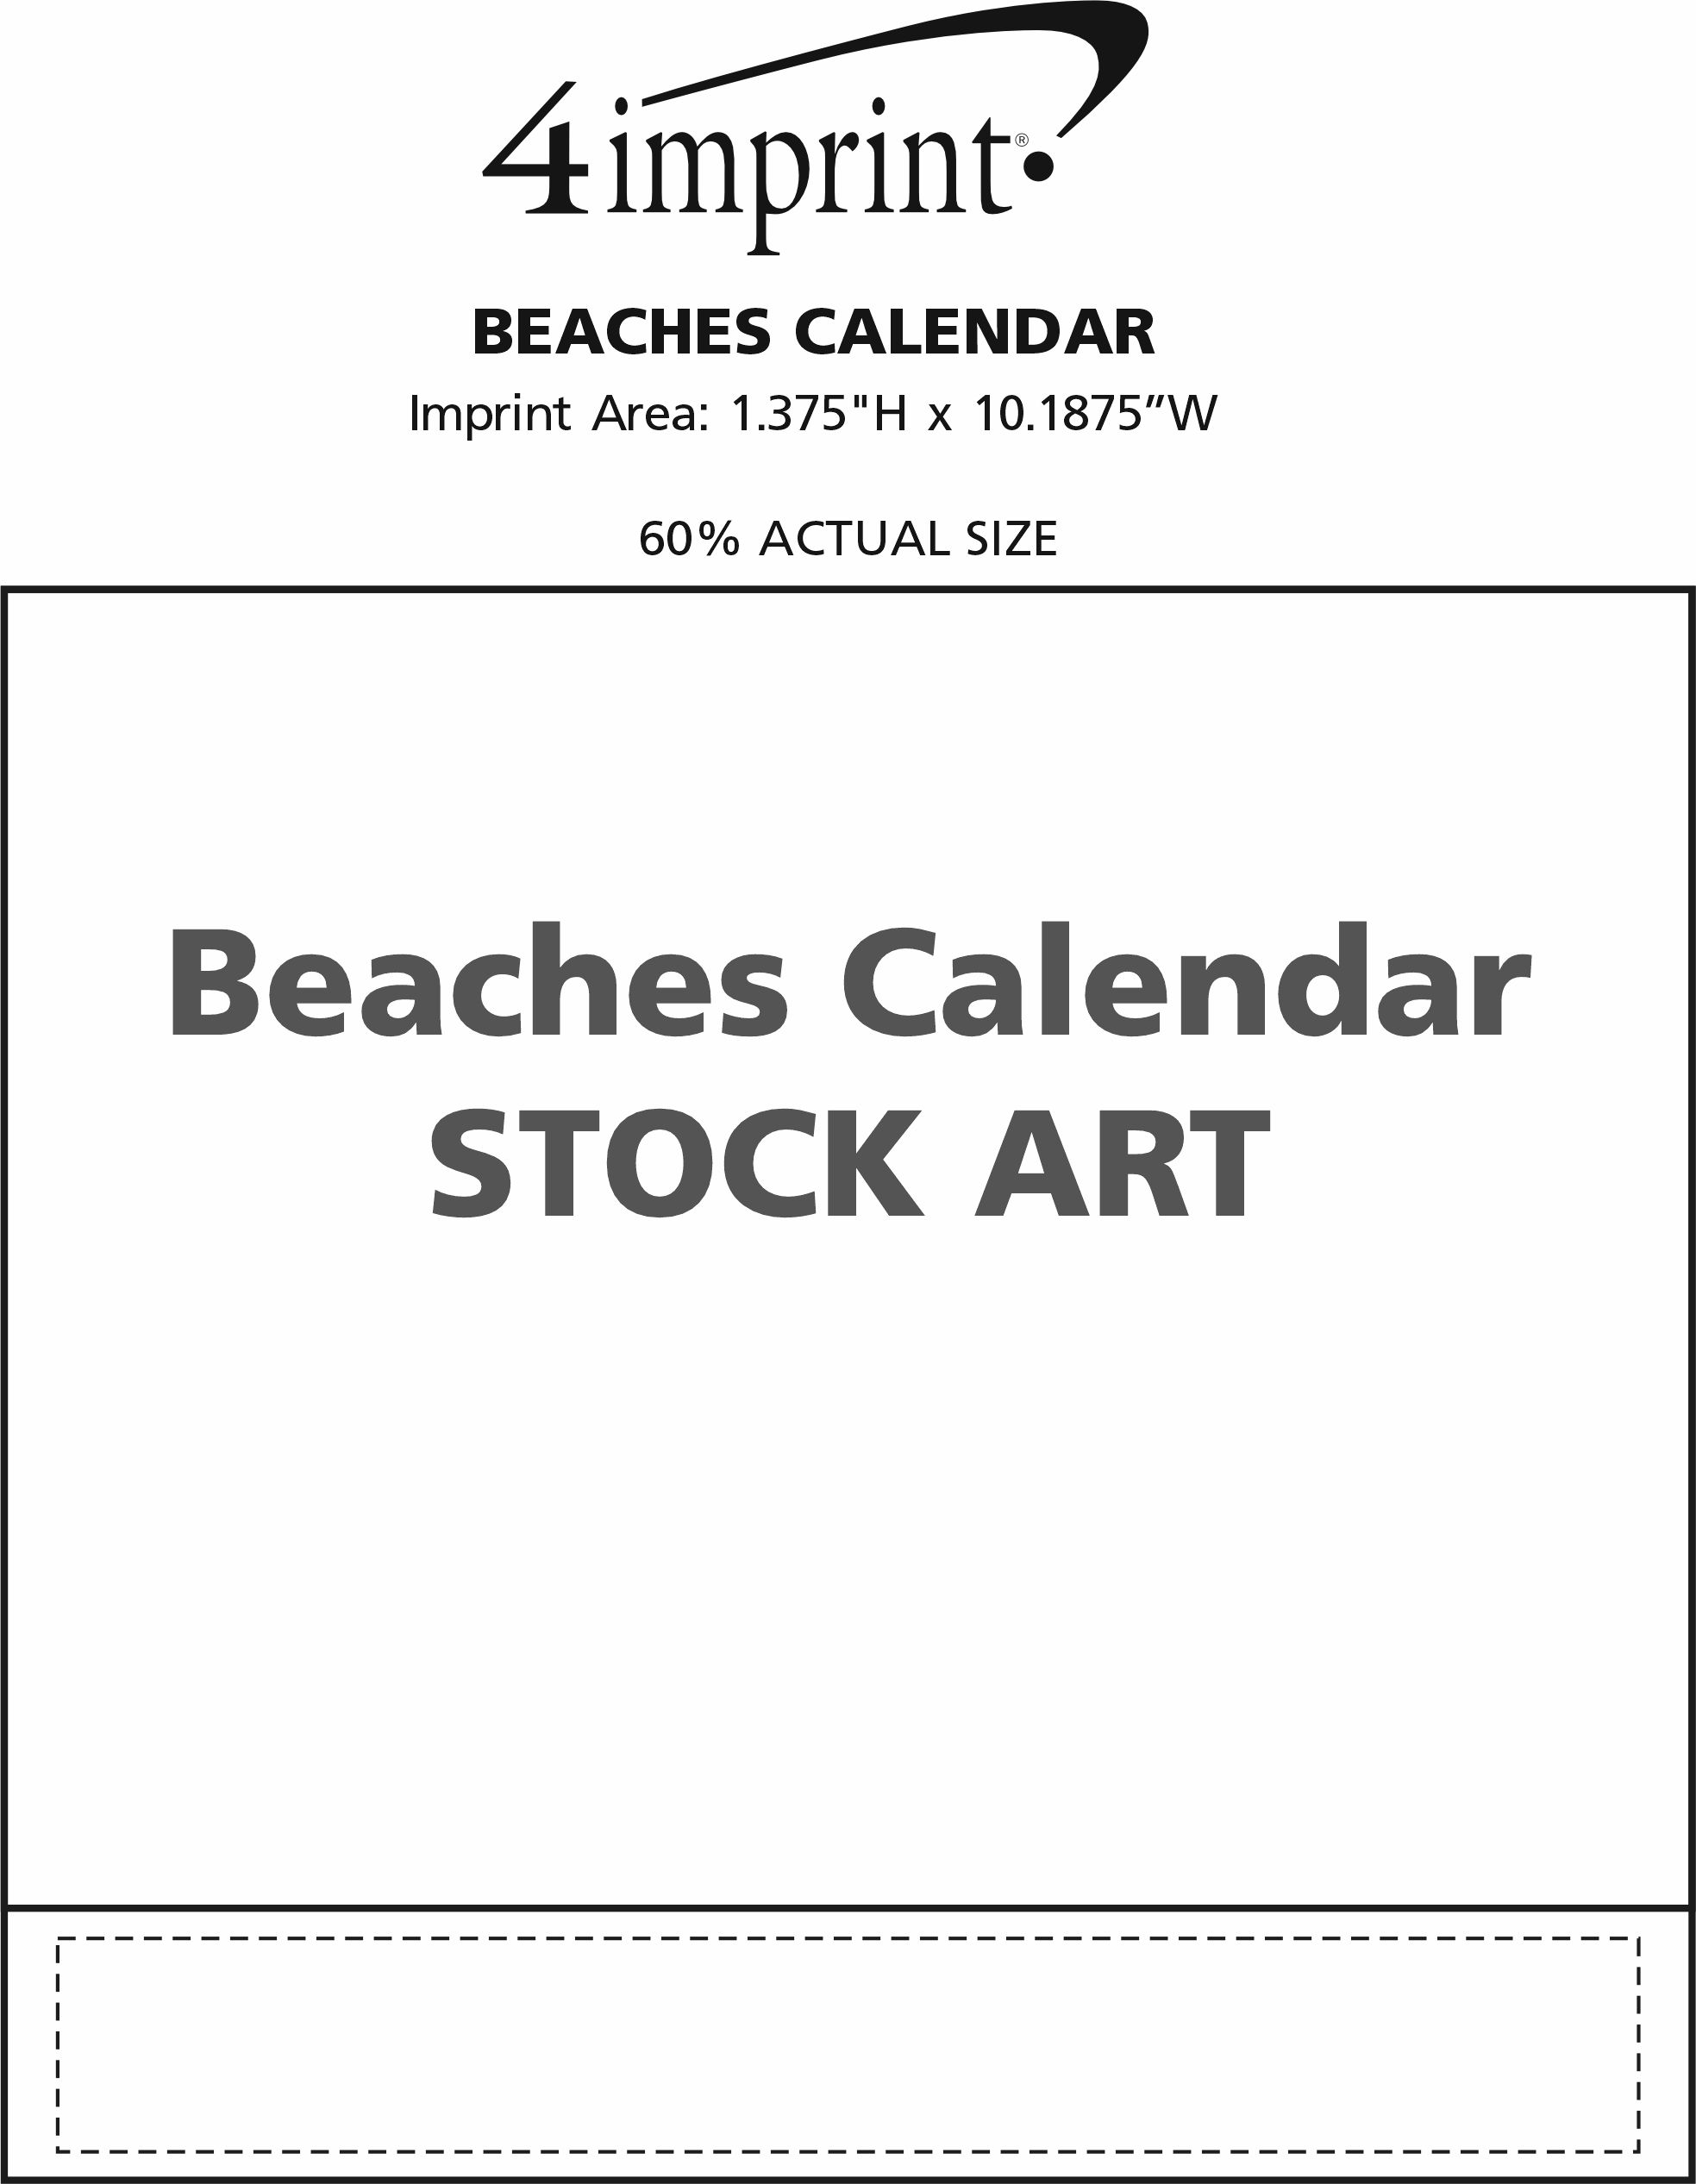 Imprint Area of Beaches Calendar